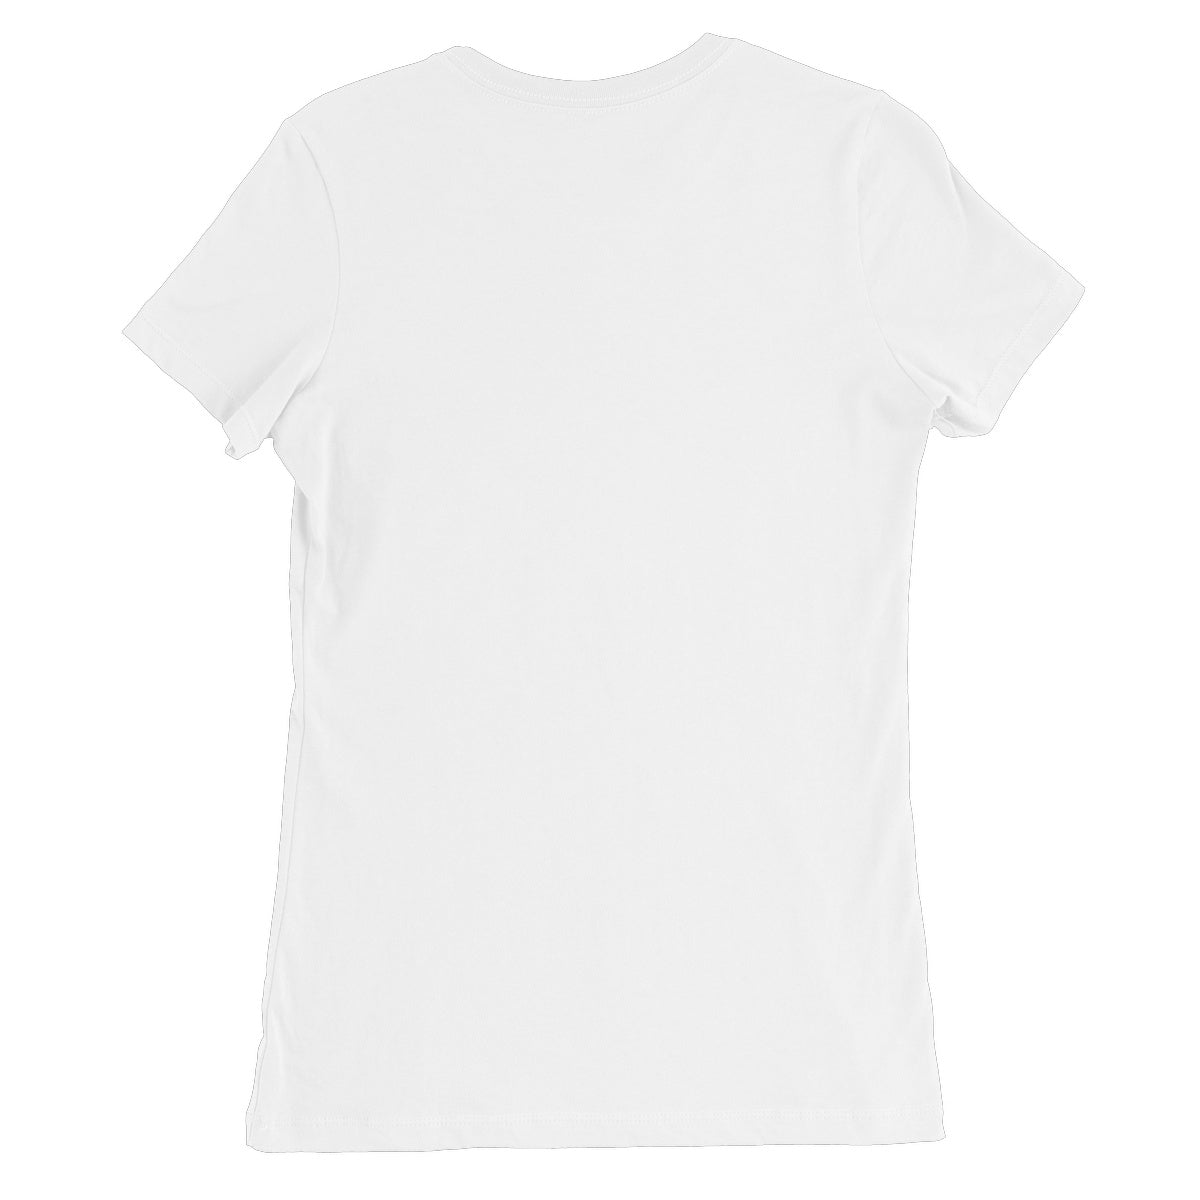 Binary Cascade, Blue and White Women's Favourite T-Shirt